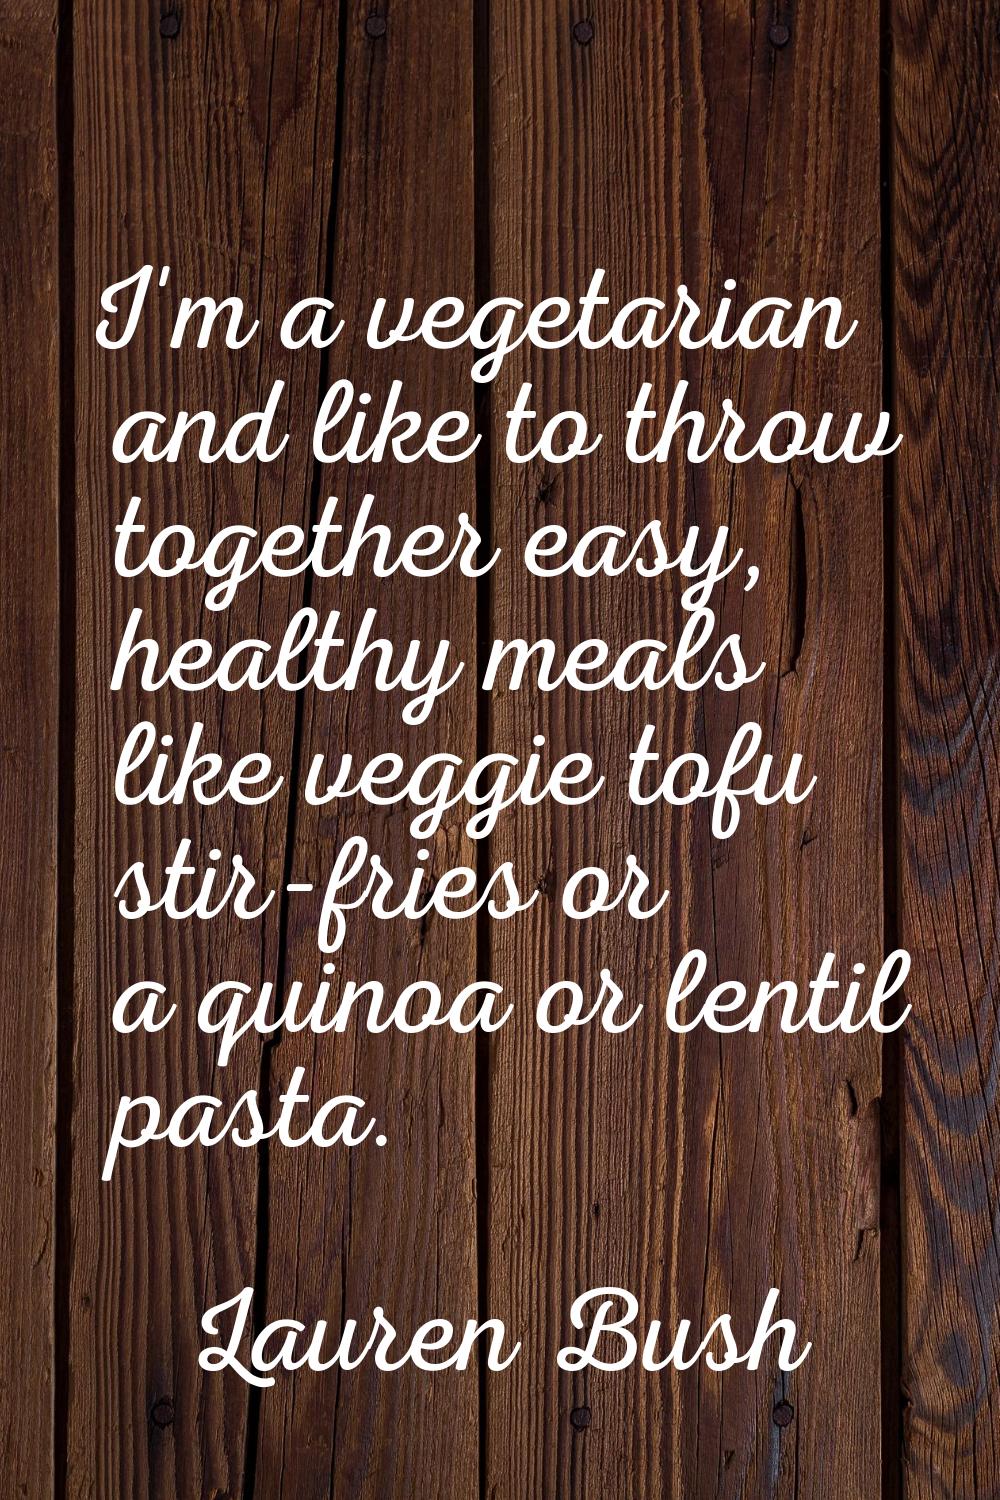 I'm a vegetarian and like to throw together easy, healthy meals like veggie tofu stir-fries or a qu